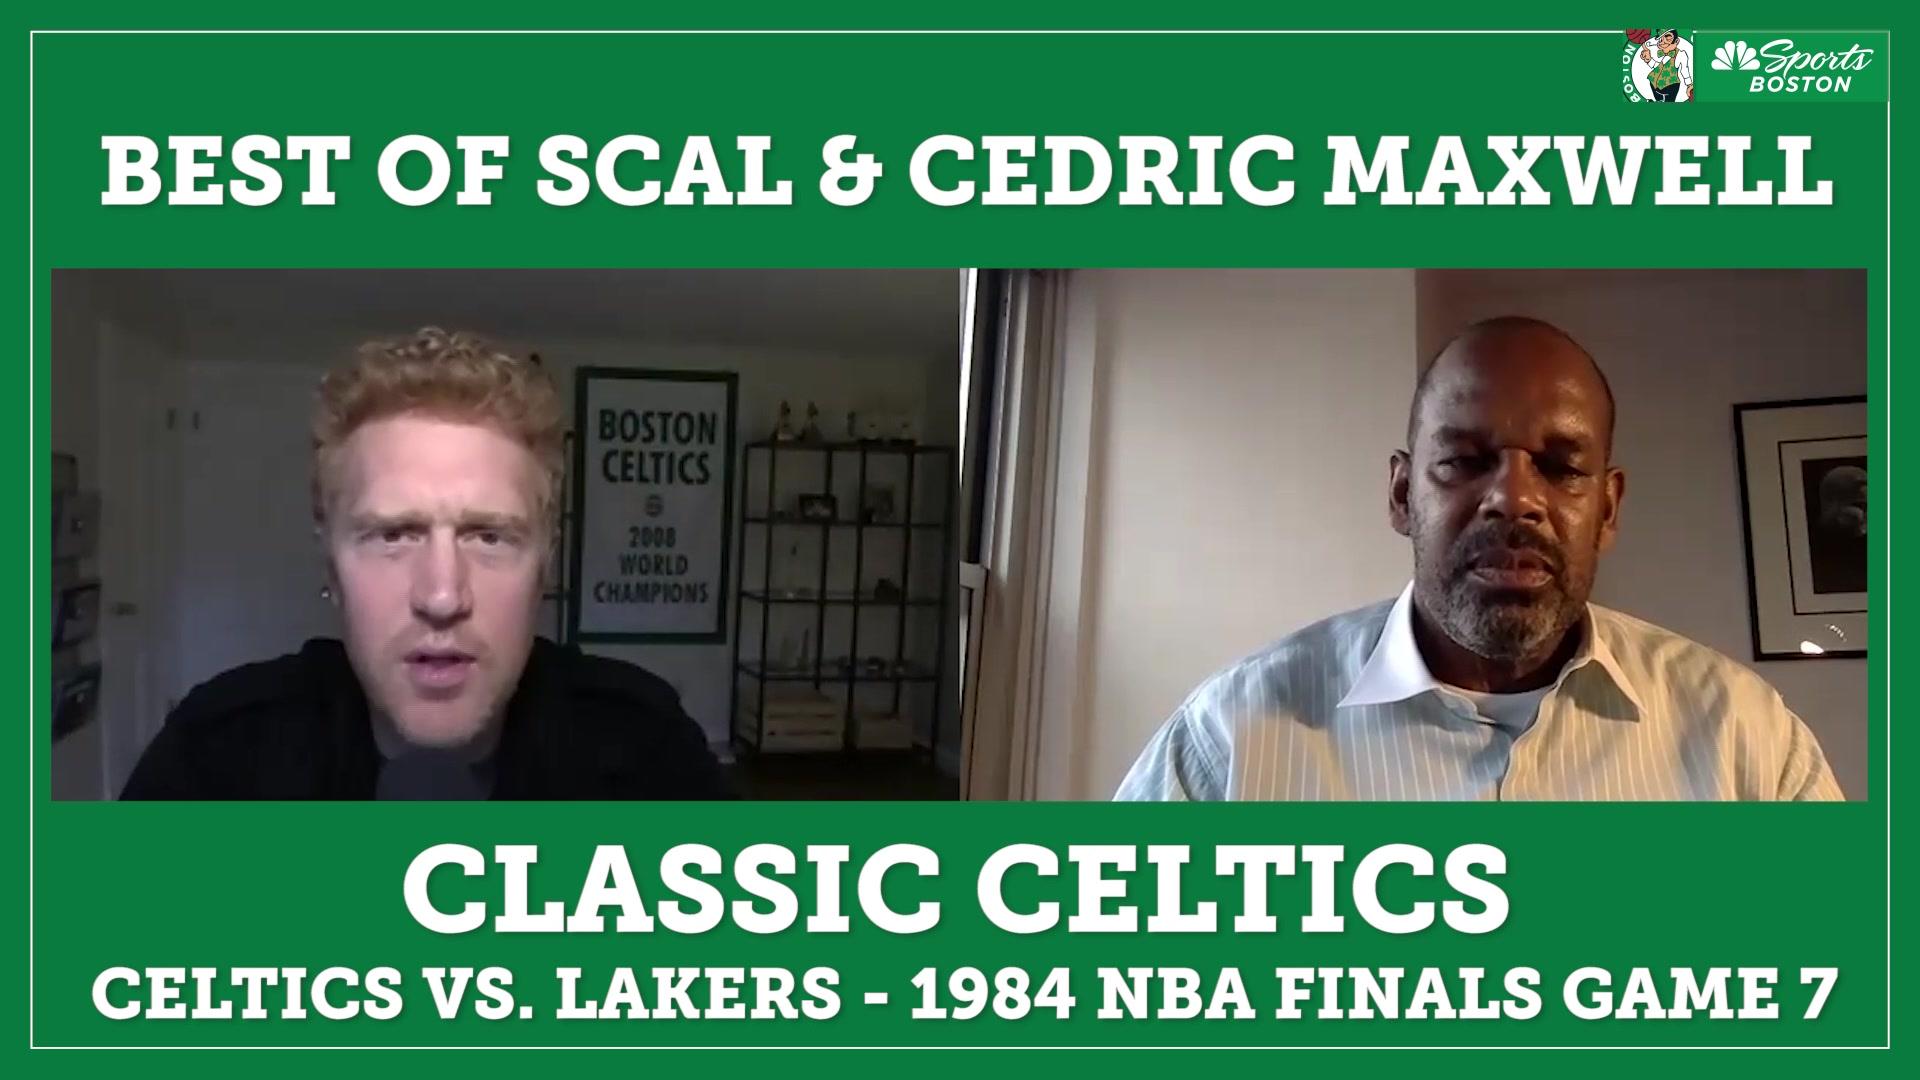 Classic Celtics: Pierce, Scal Re-live 2008 NBA Finals Game 6 on NBC Sports  Boston – NBC Boston